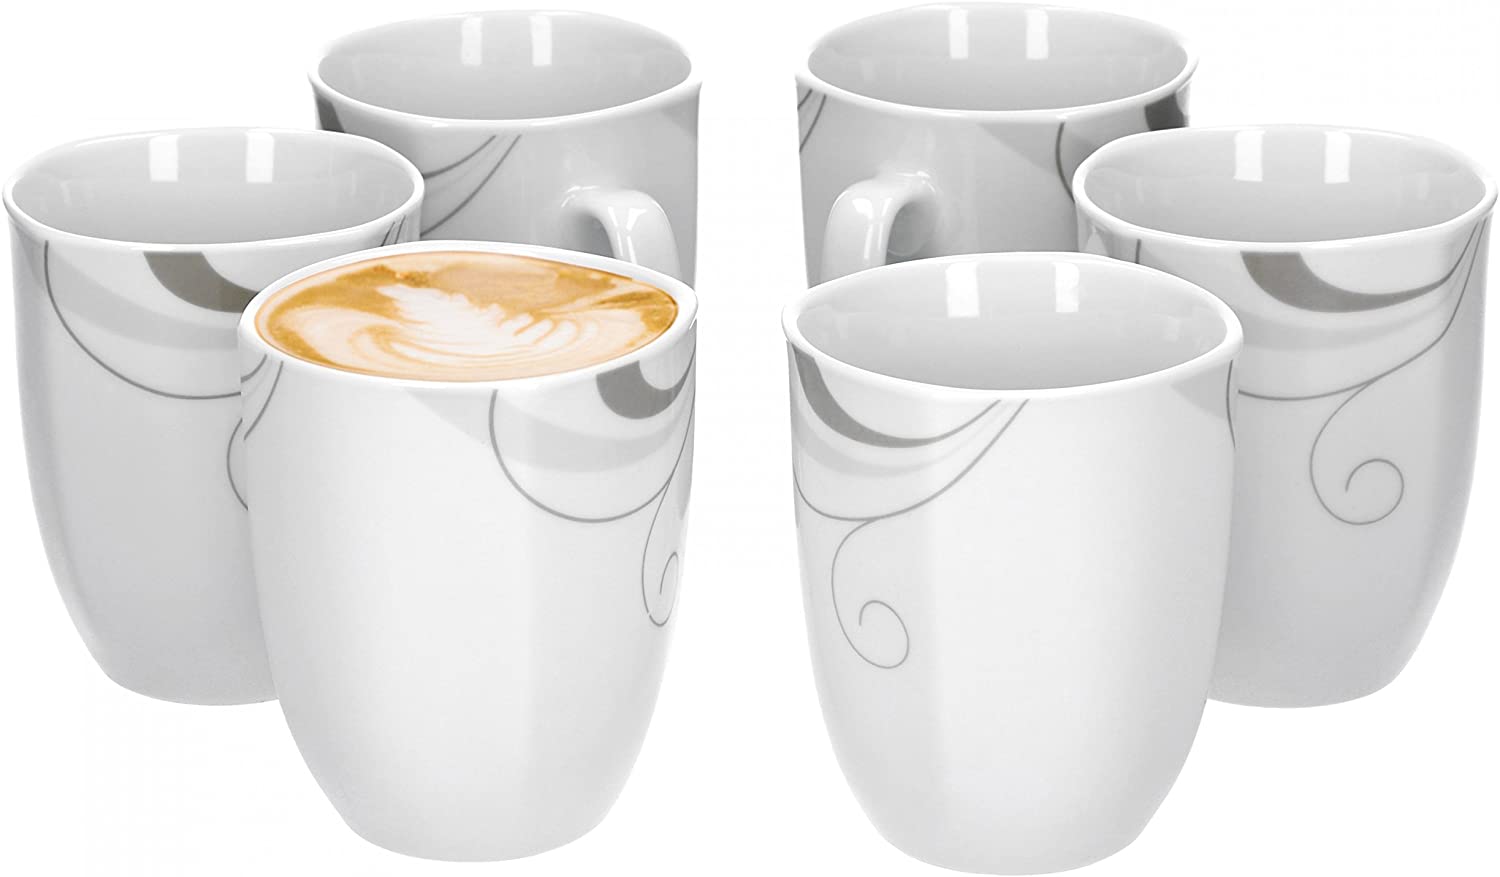 Van Well Portofino Set of 6 Coffee Mugs, 330 ml, Height 10.3 cm, Coffee Cup, Tendril Decor, Elegant Branded Porcelain